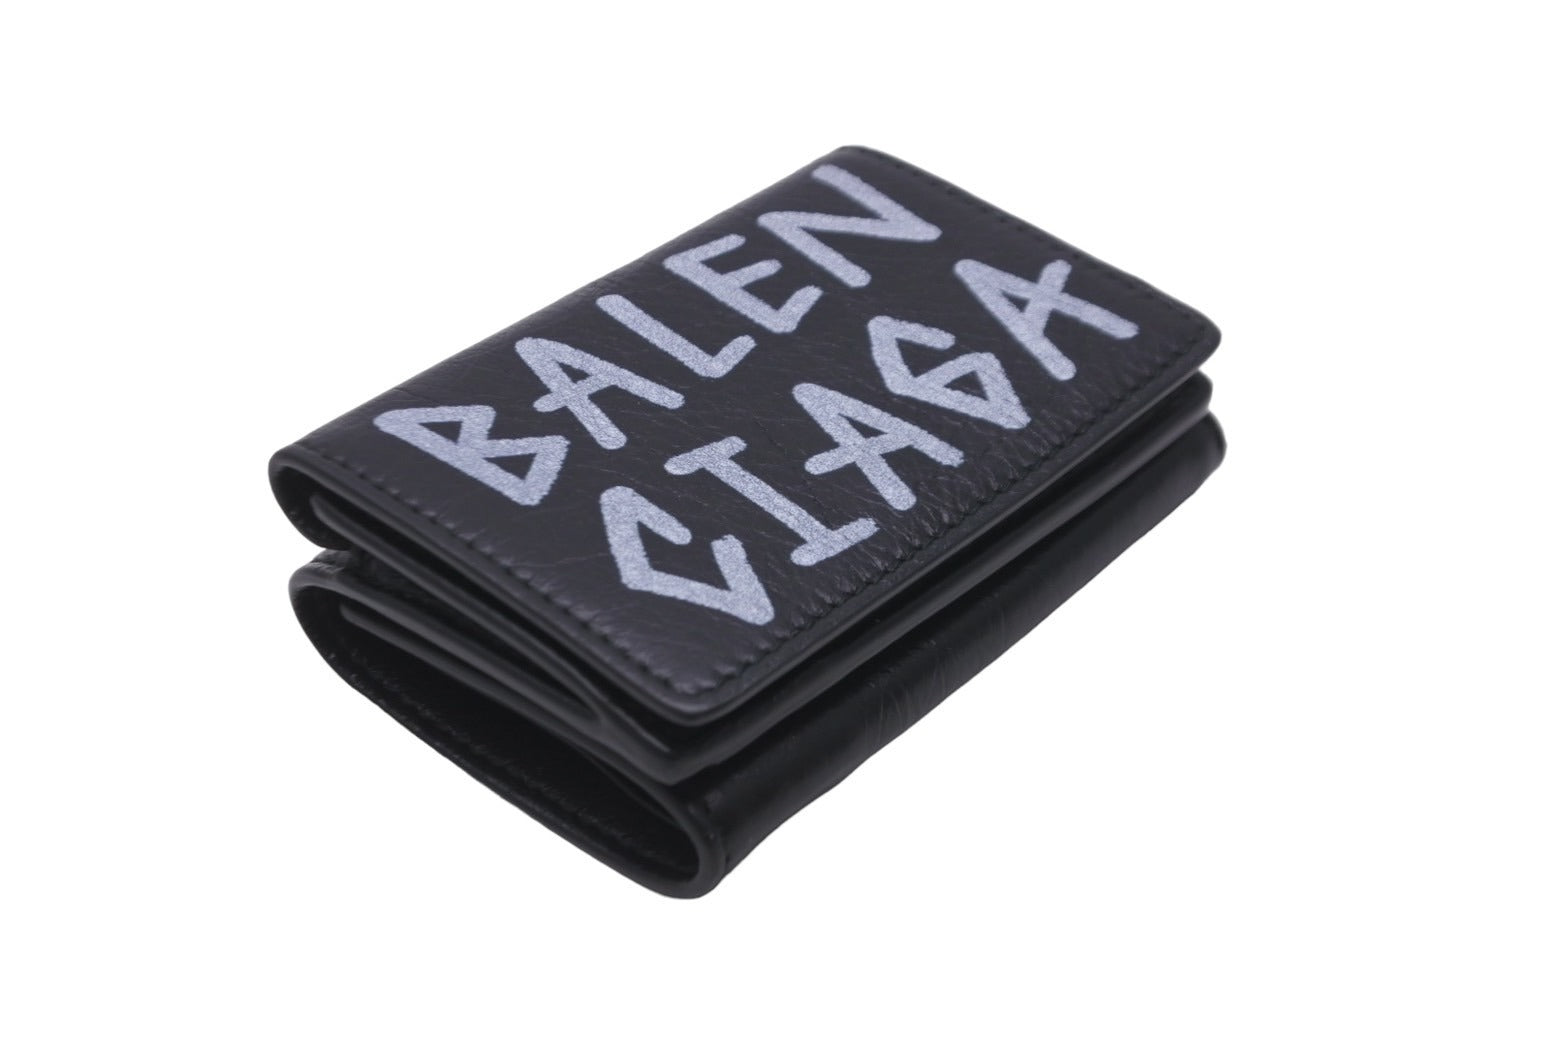 BALENCIAGA バレンシアガ 三つ折り財布 ブラック レザー 美品ホック式内側